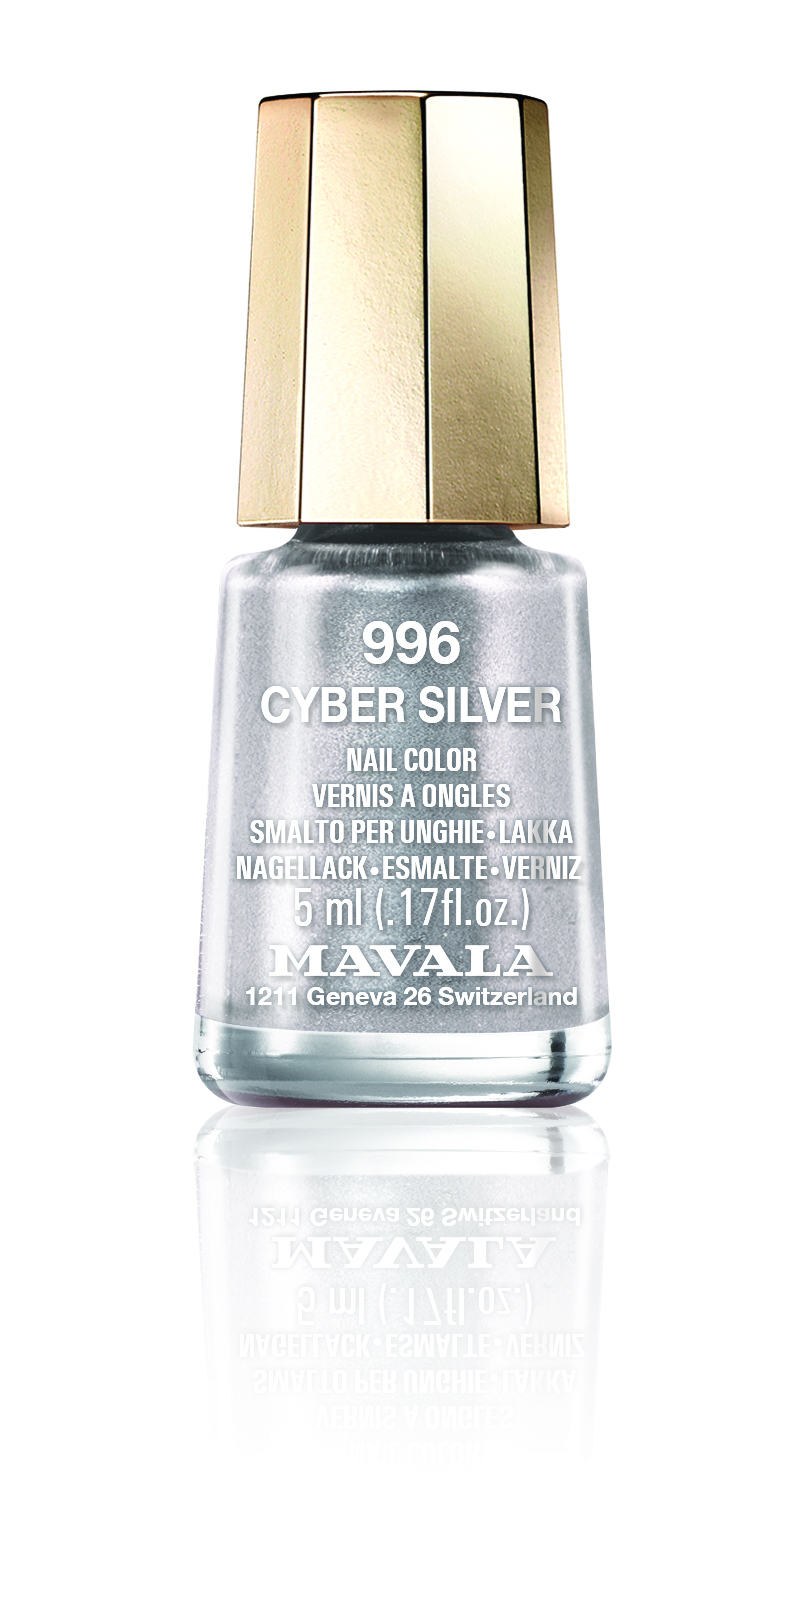 Mavala Cyber Silver nail polish